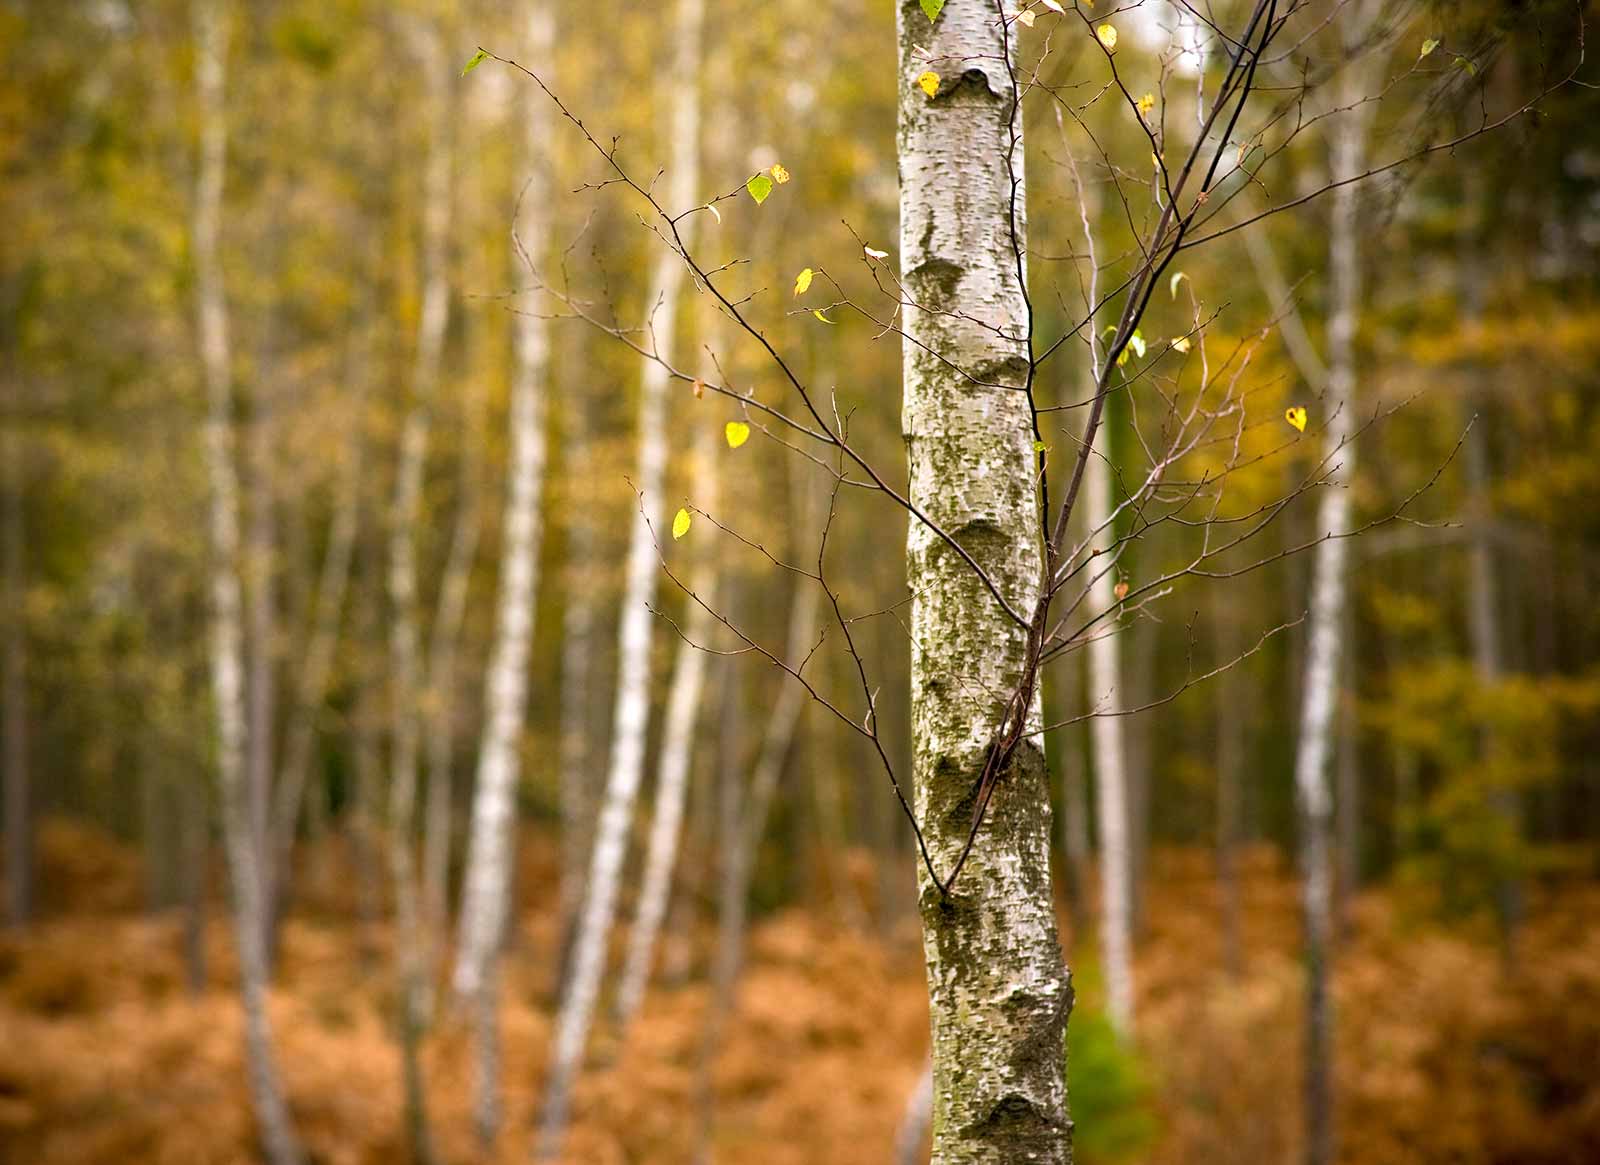 A photo of a silver birch tree, taken by Paul Close